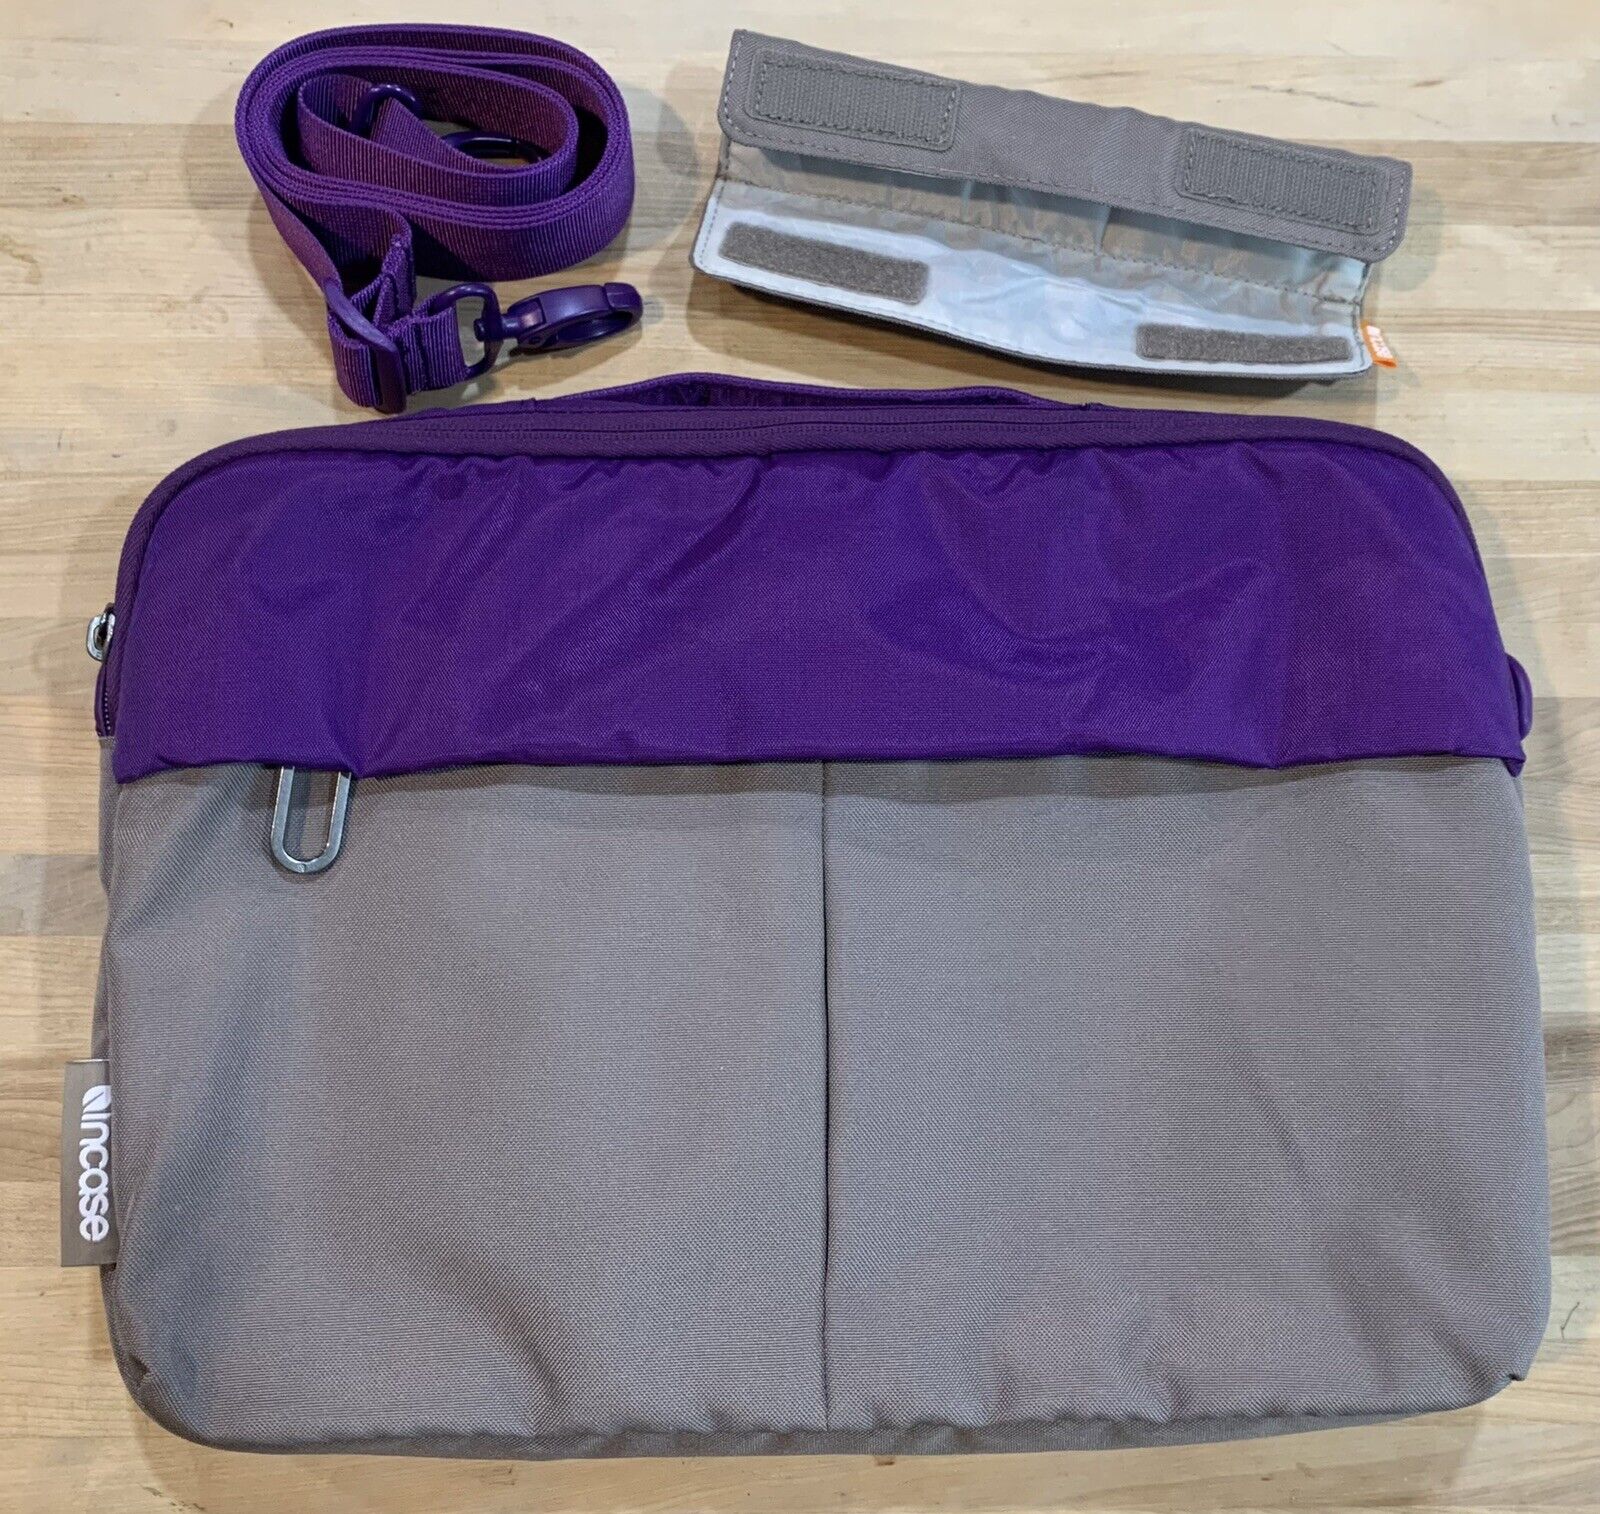 Incase Padded Laptop Bag - Multi Pocket Purple and Gray - Padded Shoulder Strap 